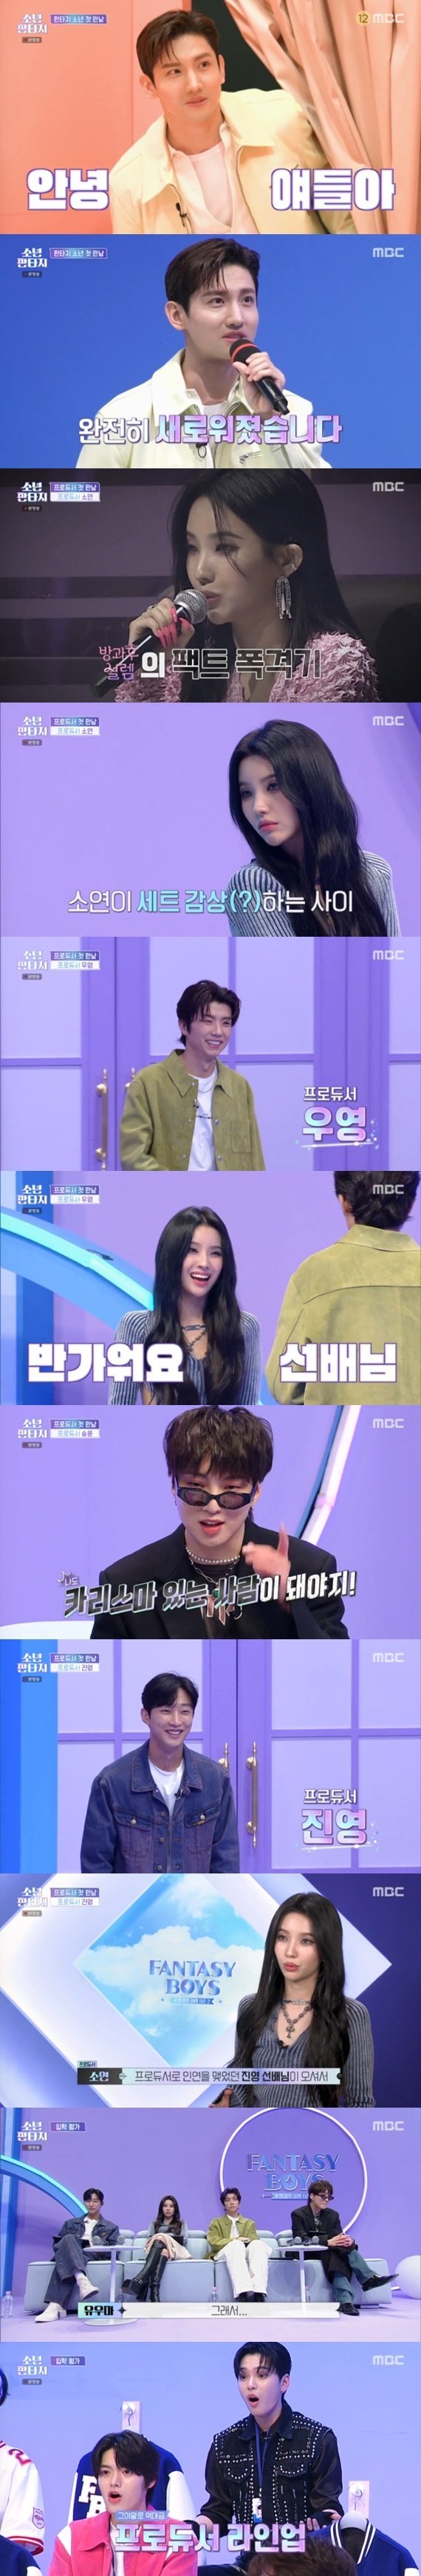 MBC '소년판타지-방과후 설렘 시즌2' 캡처